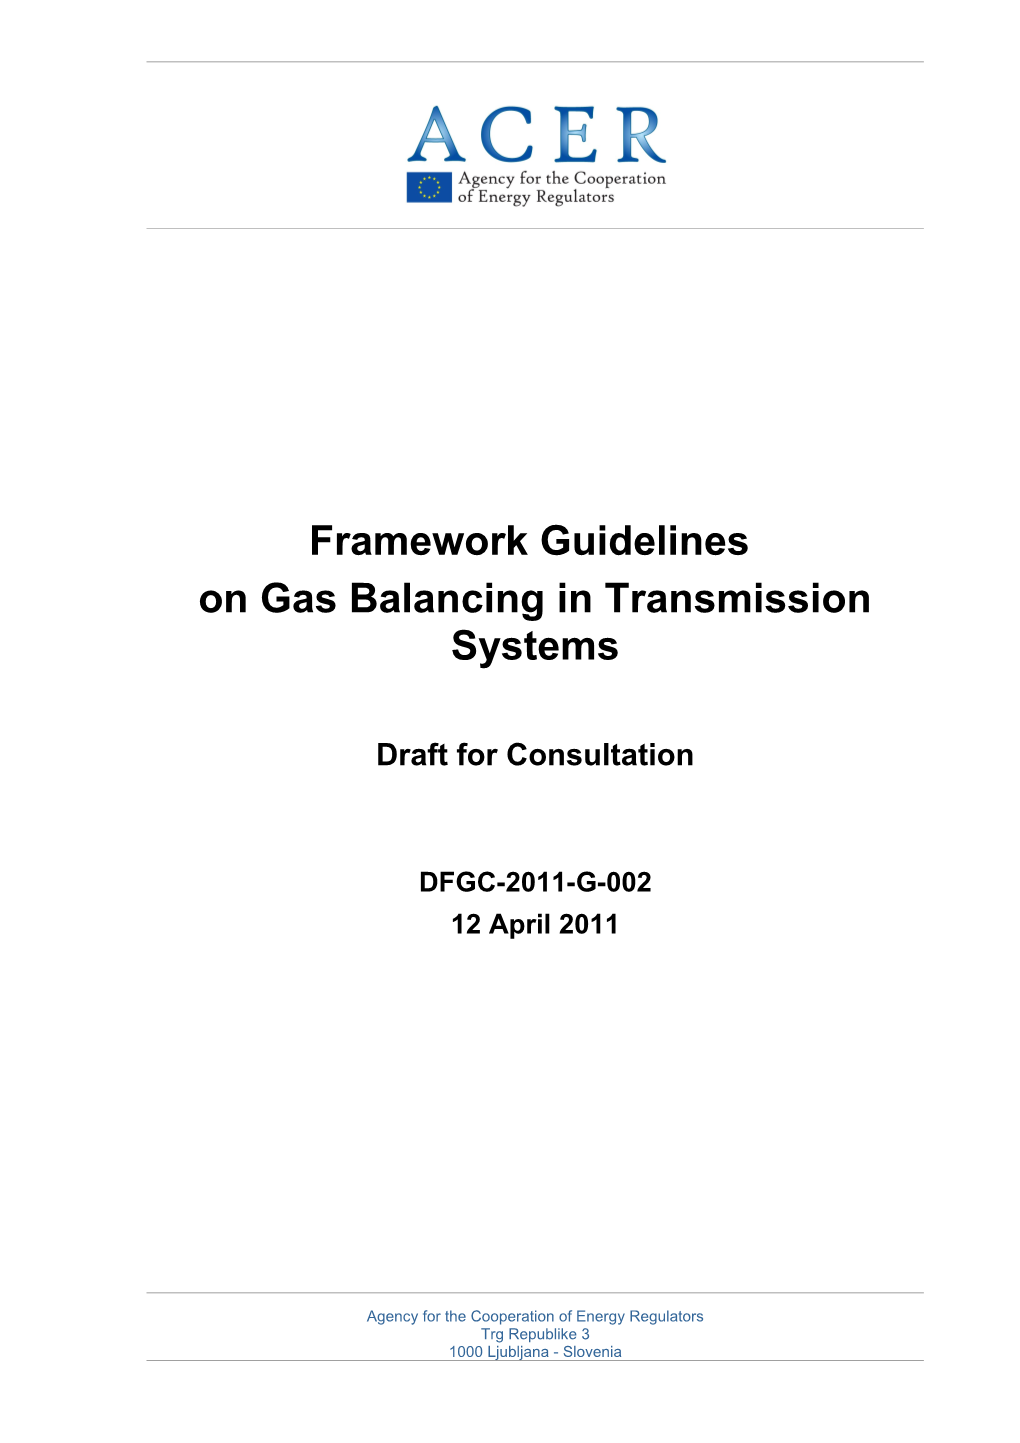 GWG: Revised Gas Balancing FG Document